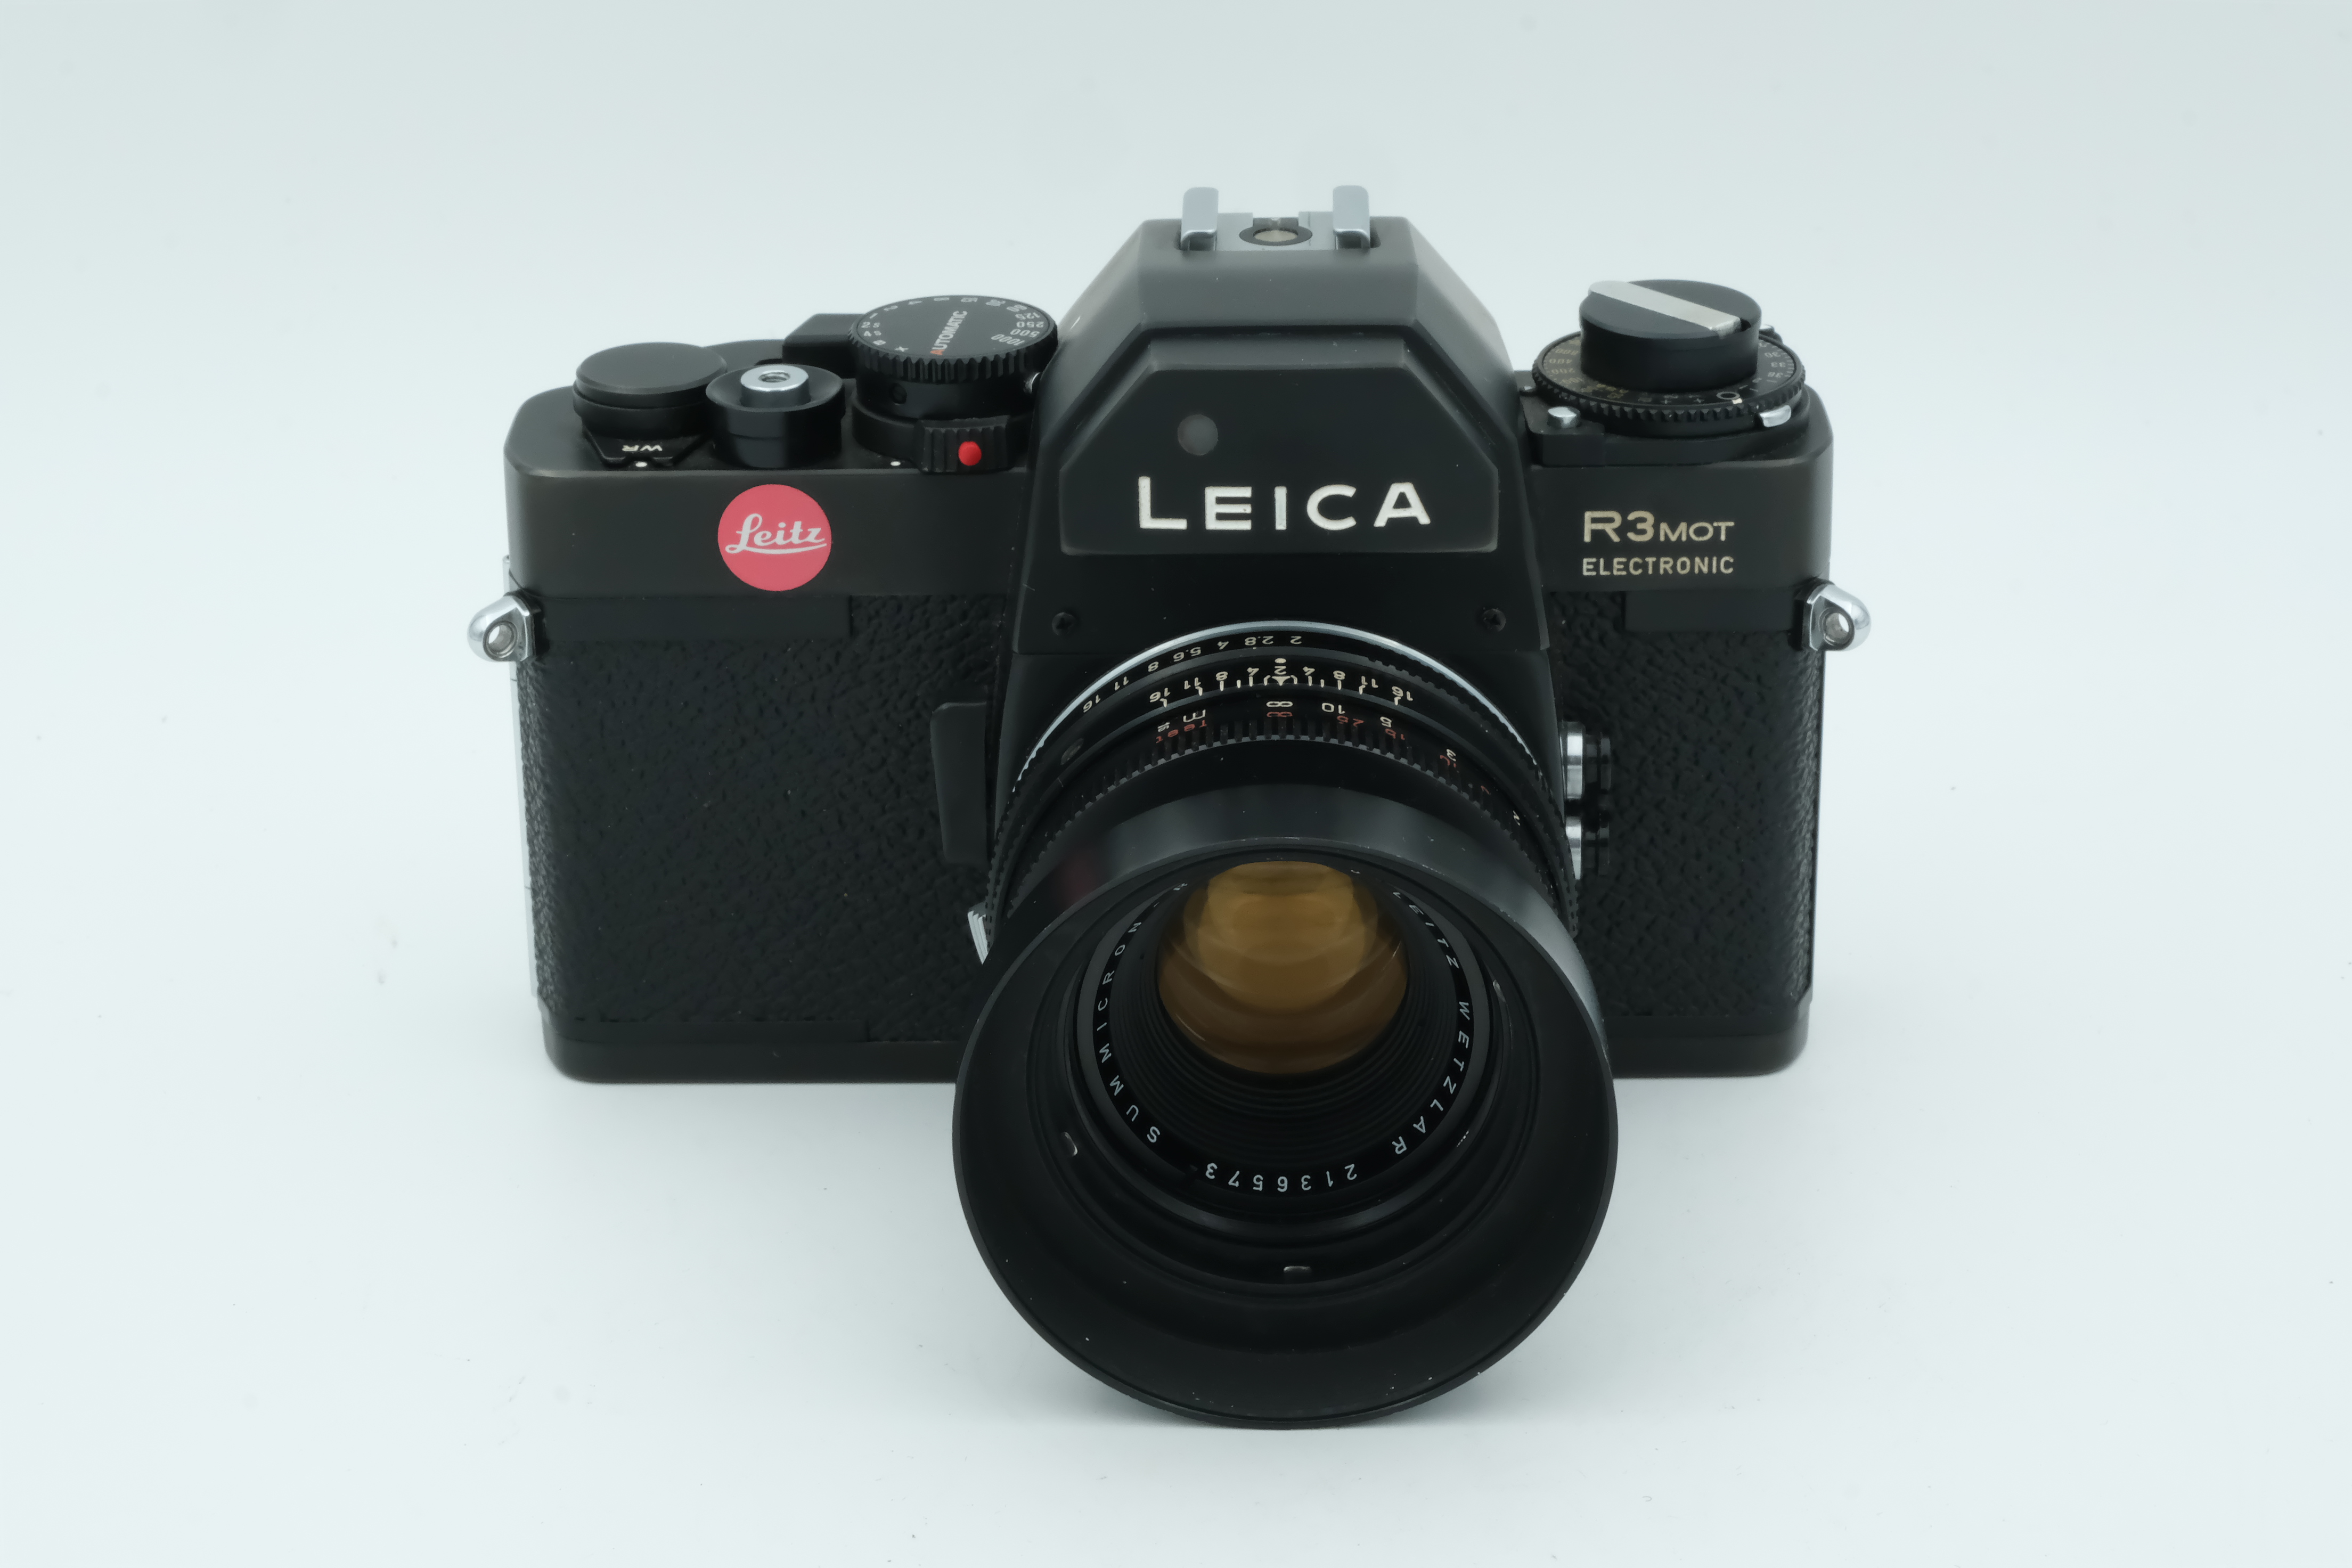 Leica R3 Mot Elecronic